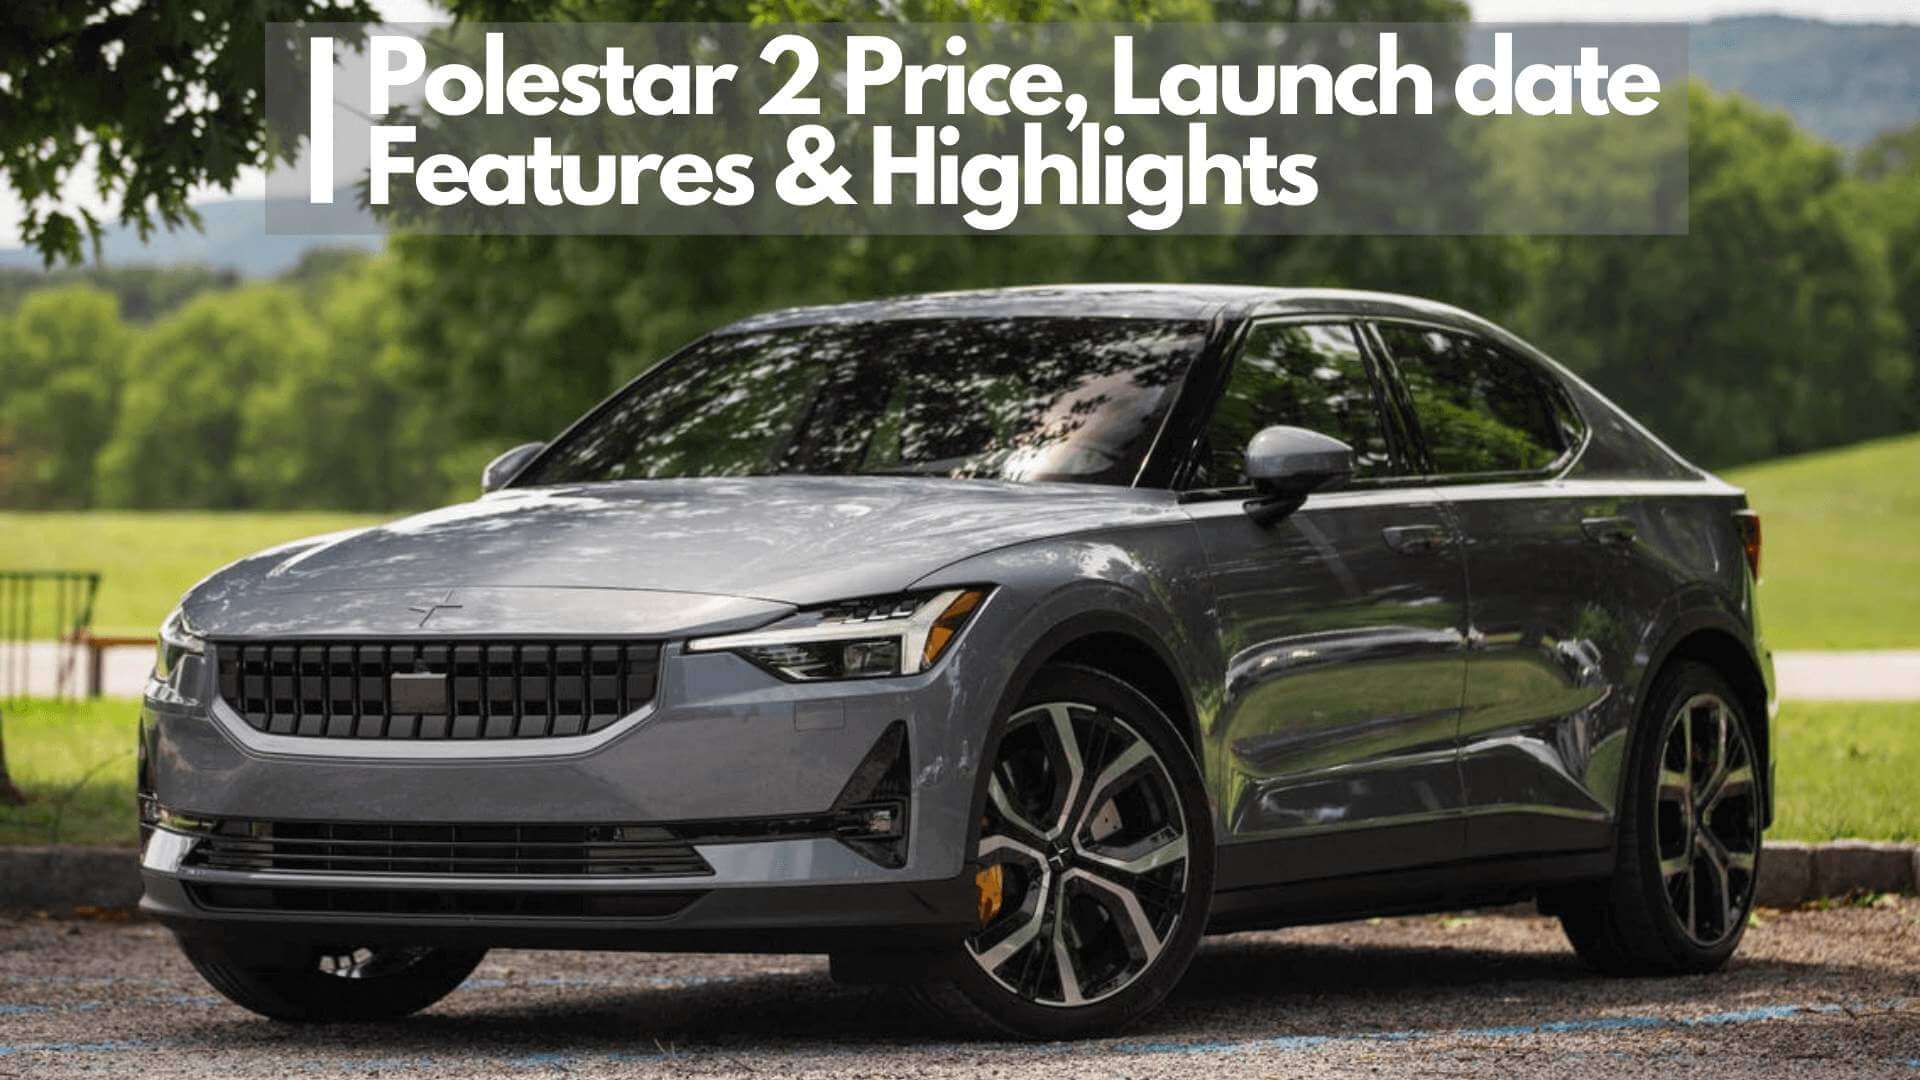 https://e-vehicleinfo.com/polestar-2-price-launch-date-features-highlights/